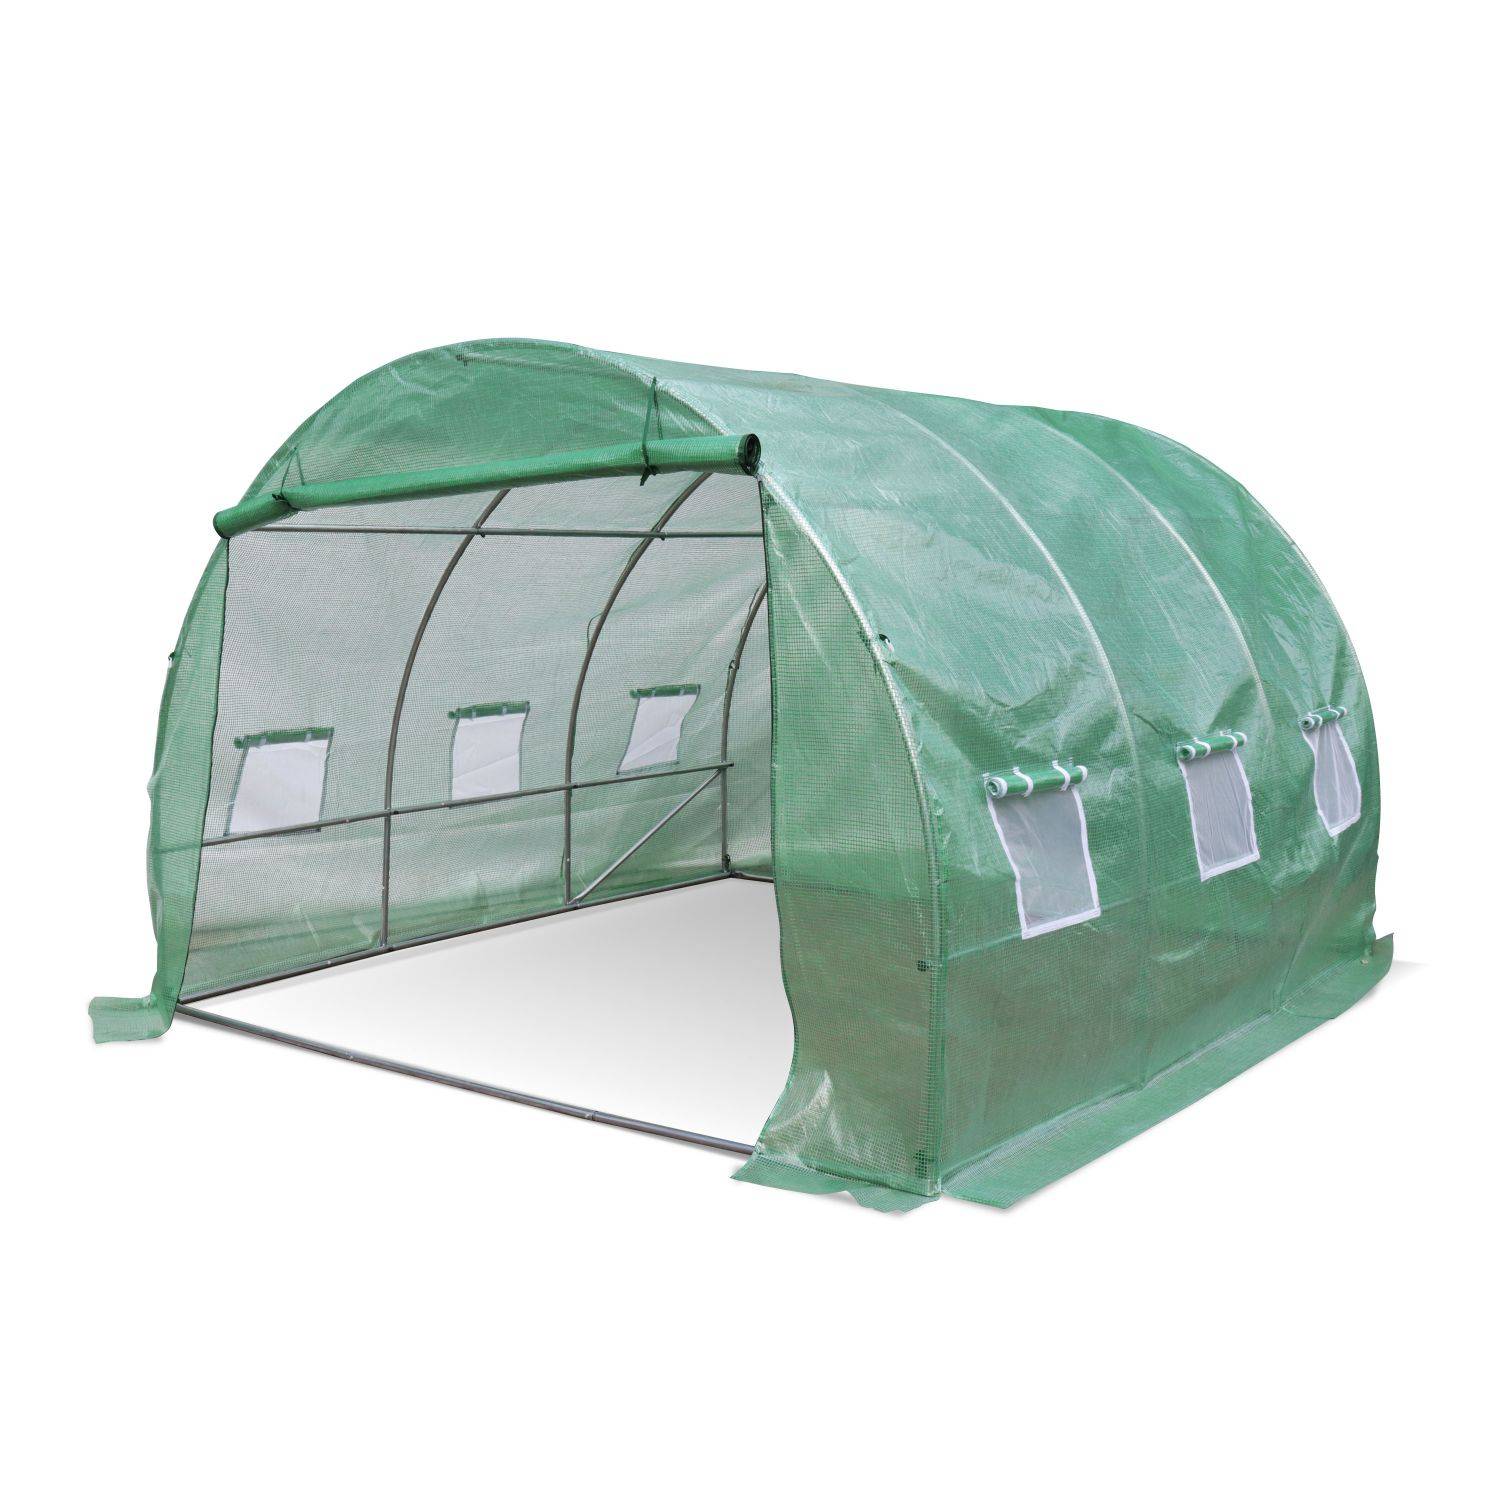 9m² polyethylene tunnel greenhouse - 297x295x196cm - Thym - Green,sweeek,Photo1